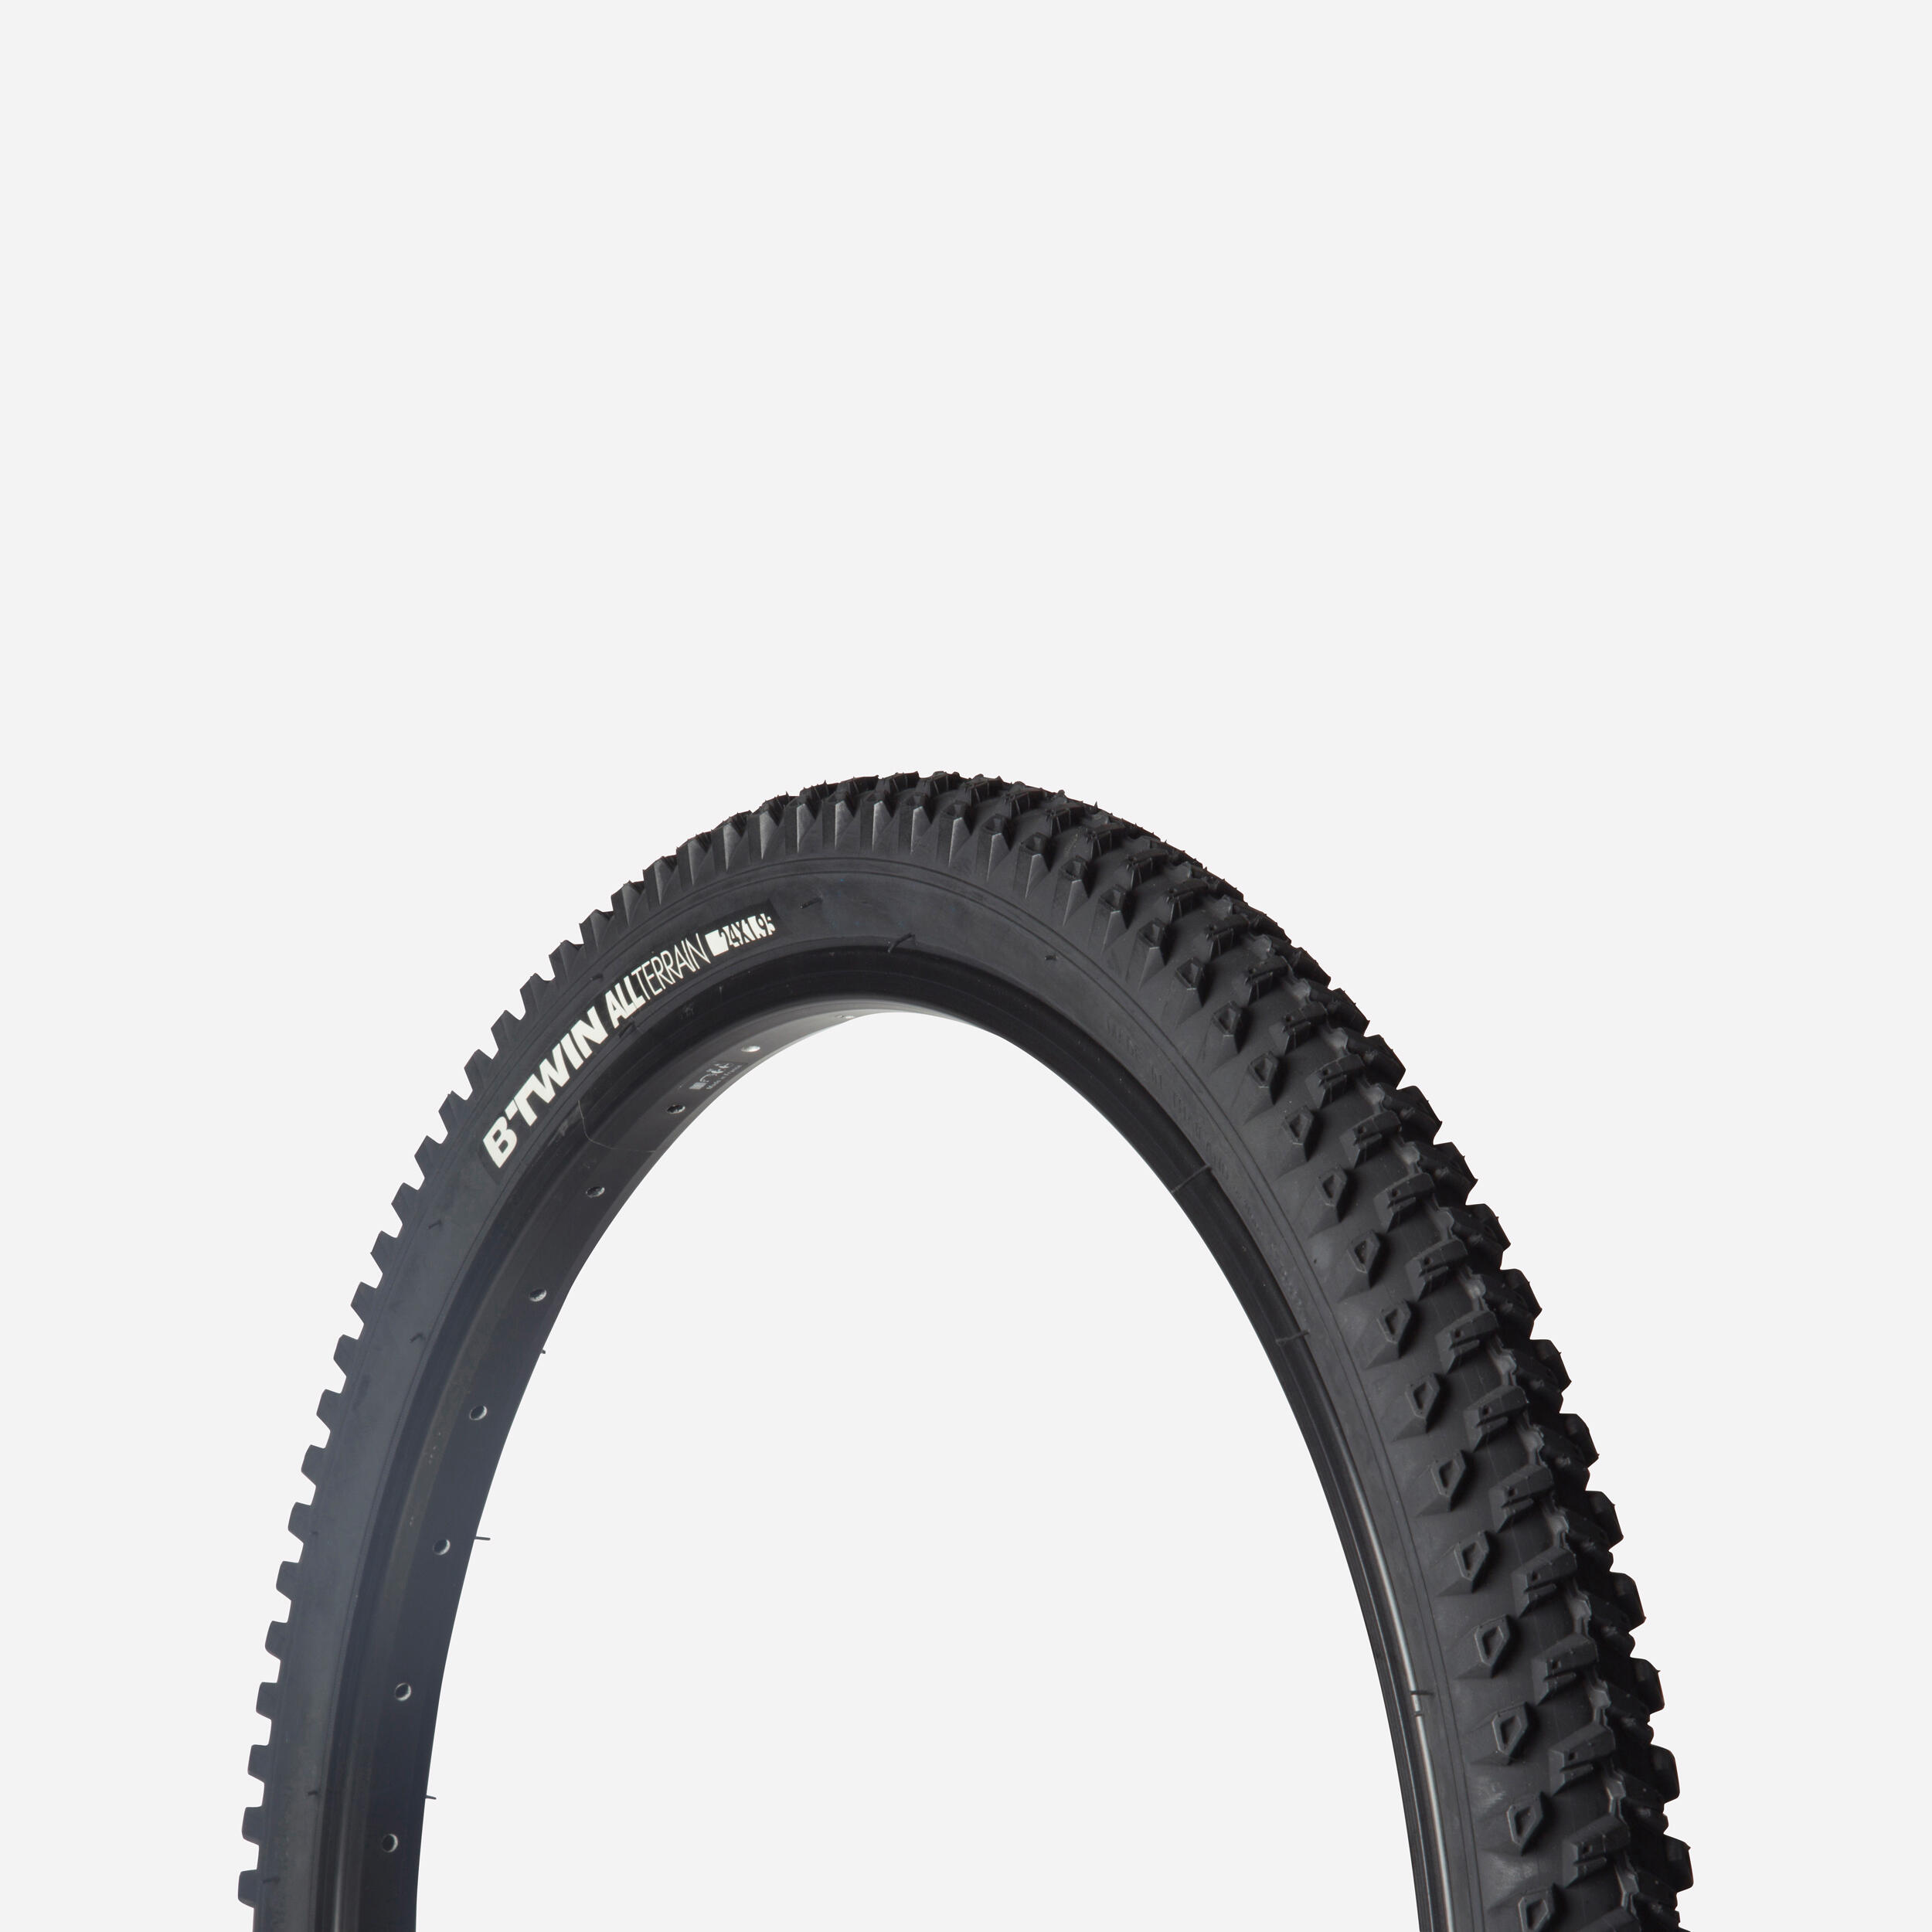 24 inch bike tyres